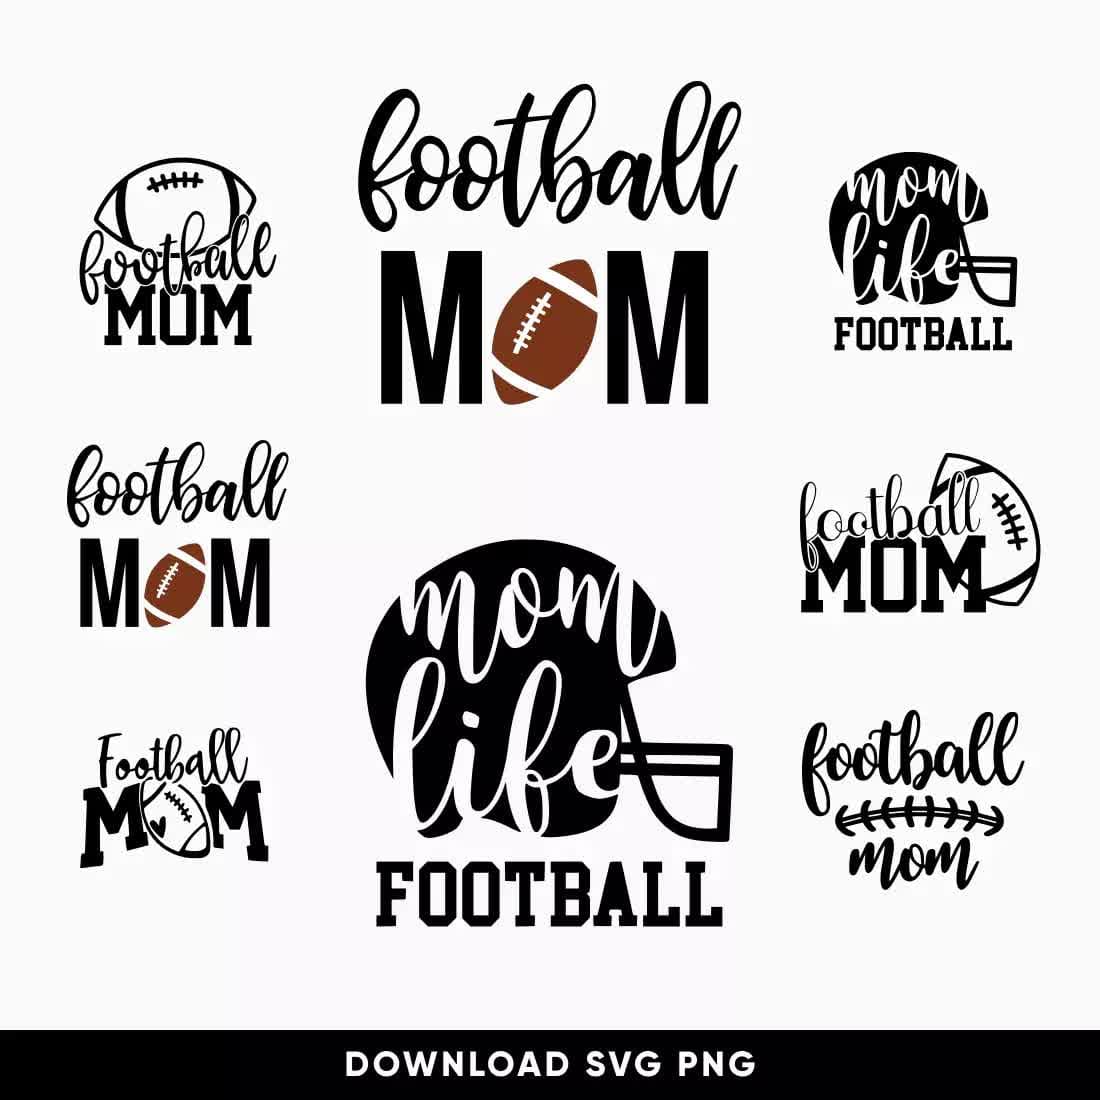 Football Mom SVG Bundle Preview 3.